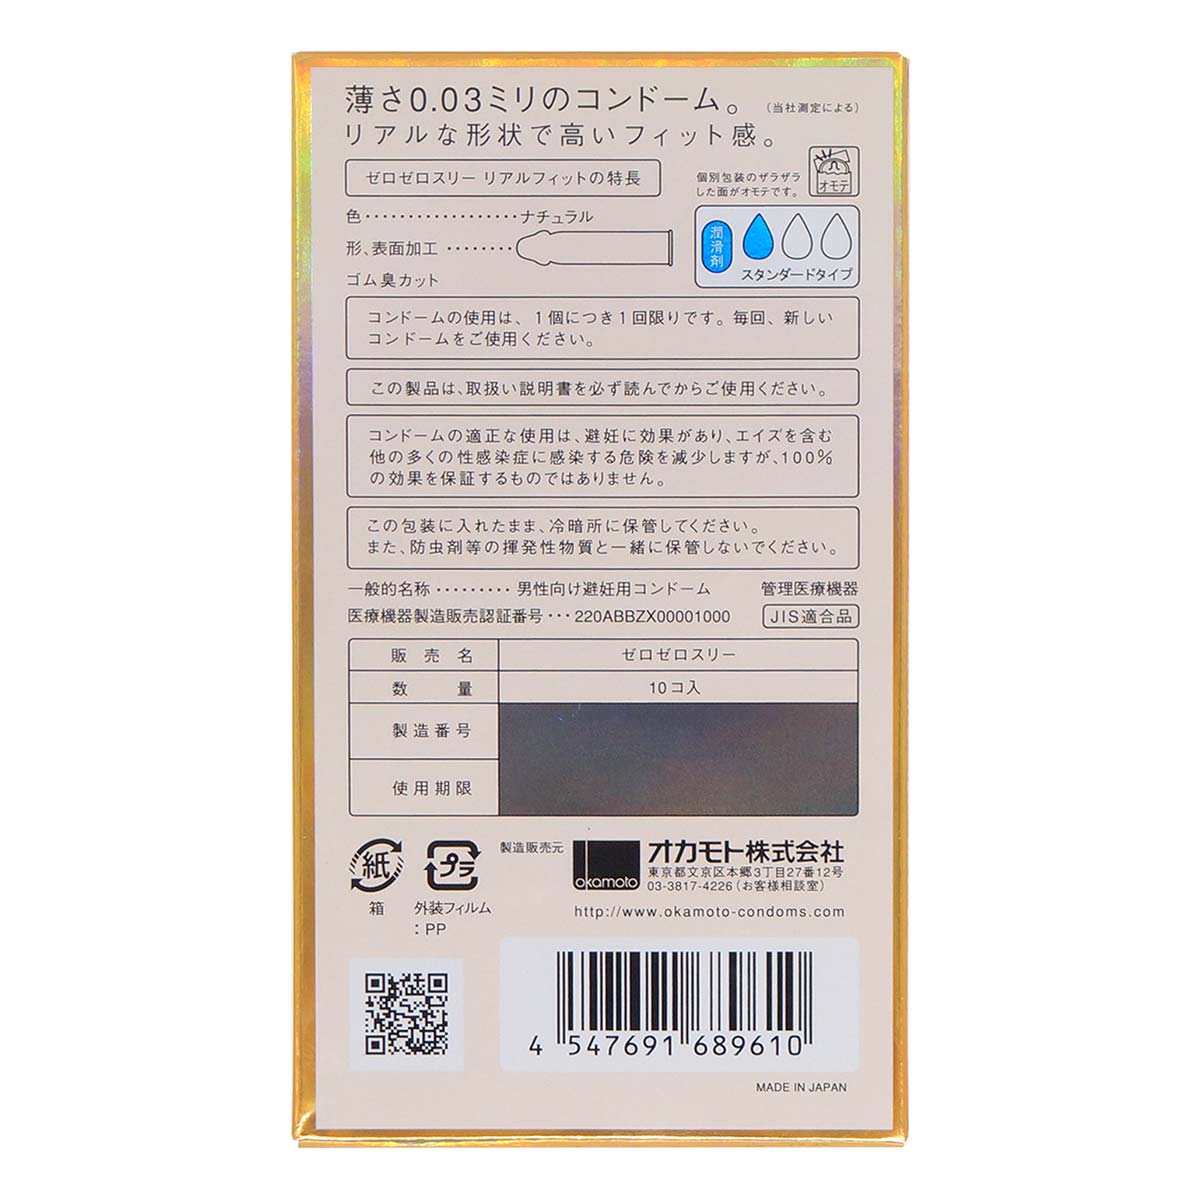 Zero Zero Three 0.03 Real Fit (Japan Edition) 10's Pack Latex Condom-p_3